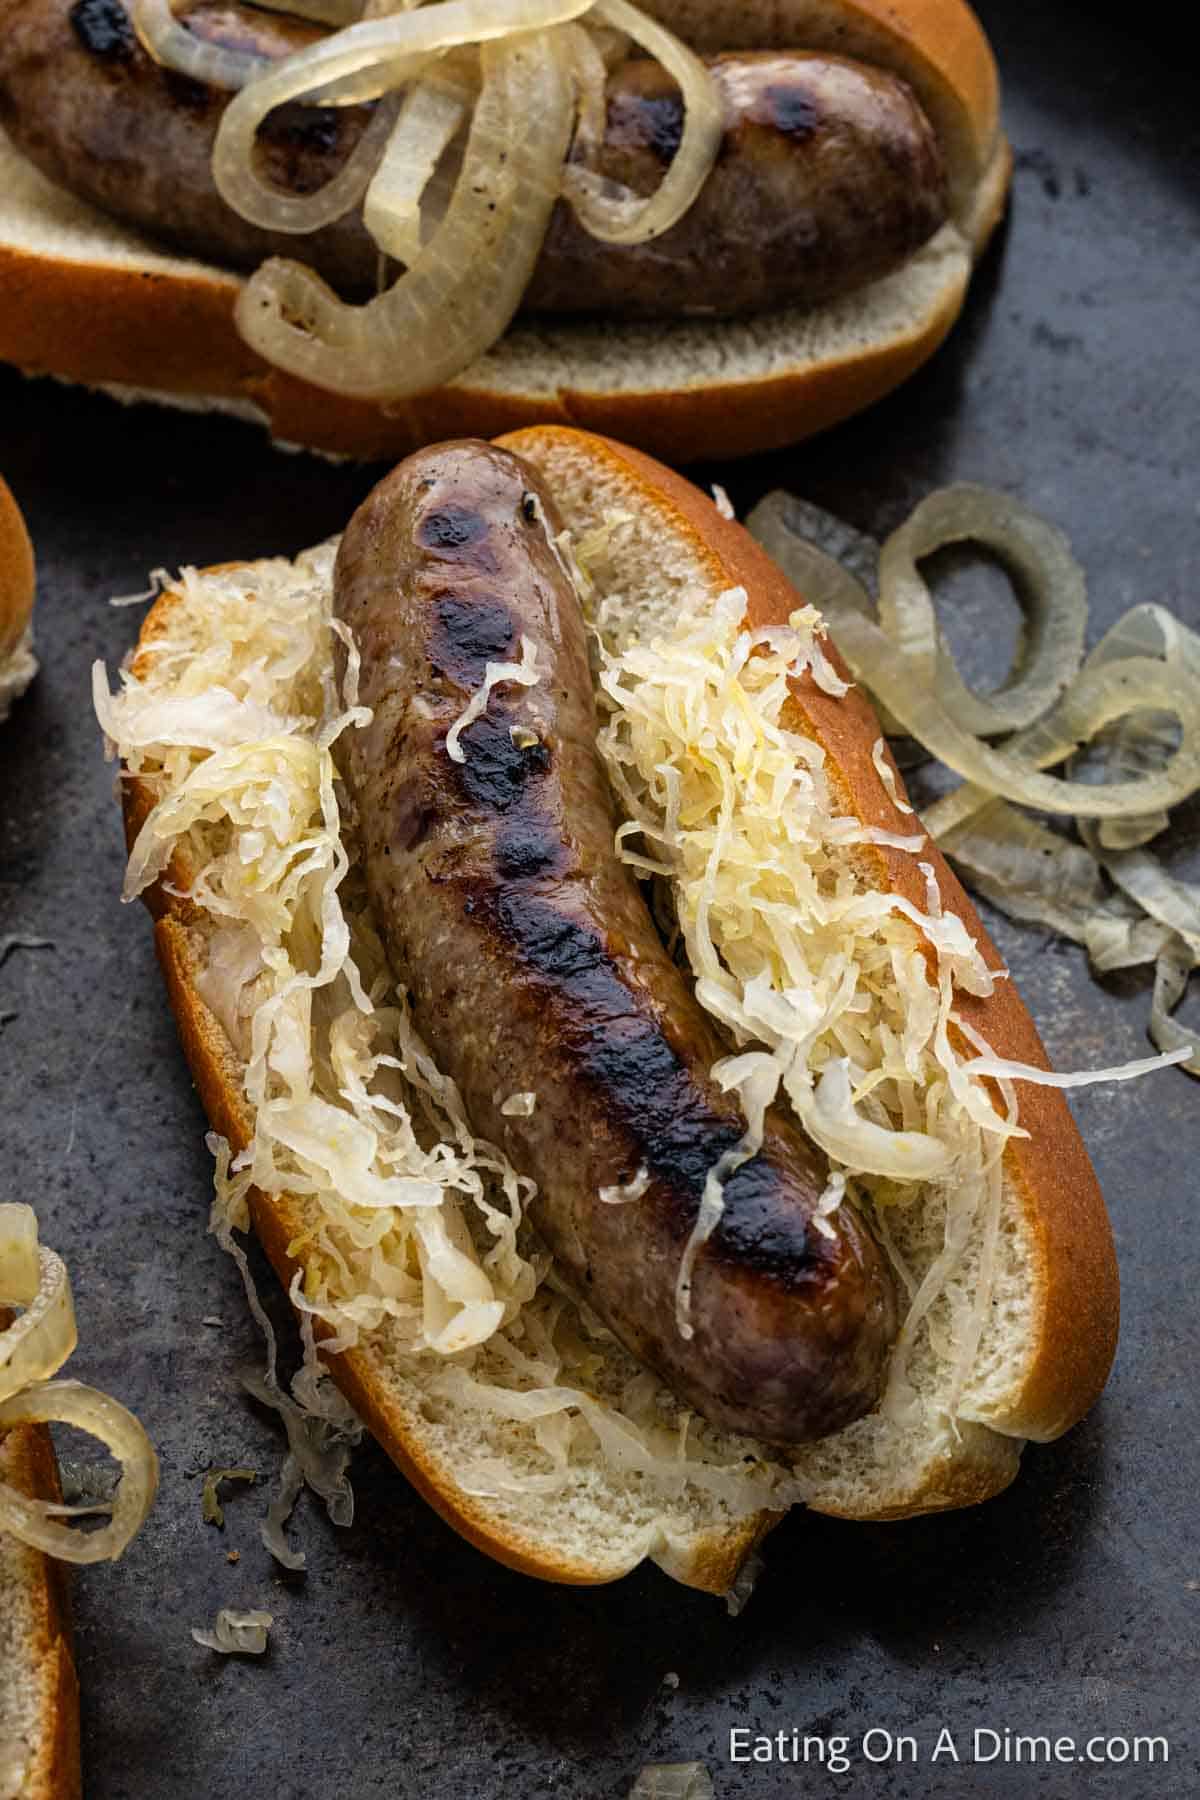 Grilled brats on a bun with sauerkraut on a plate